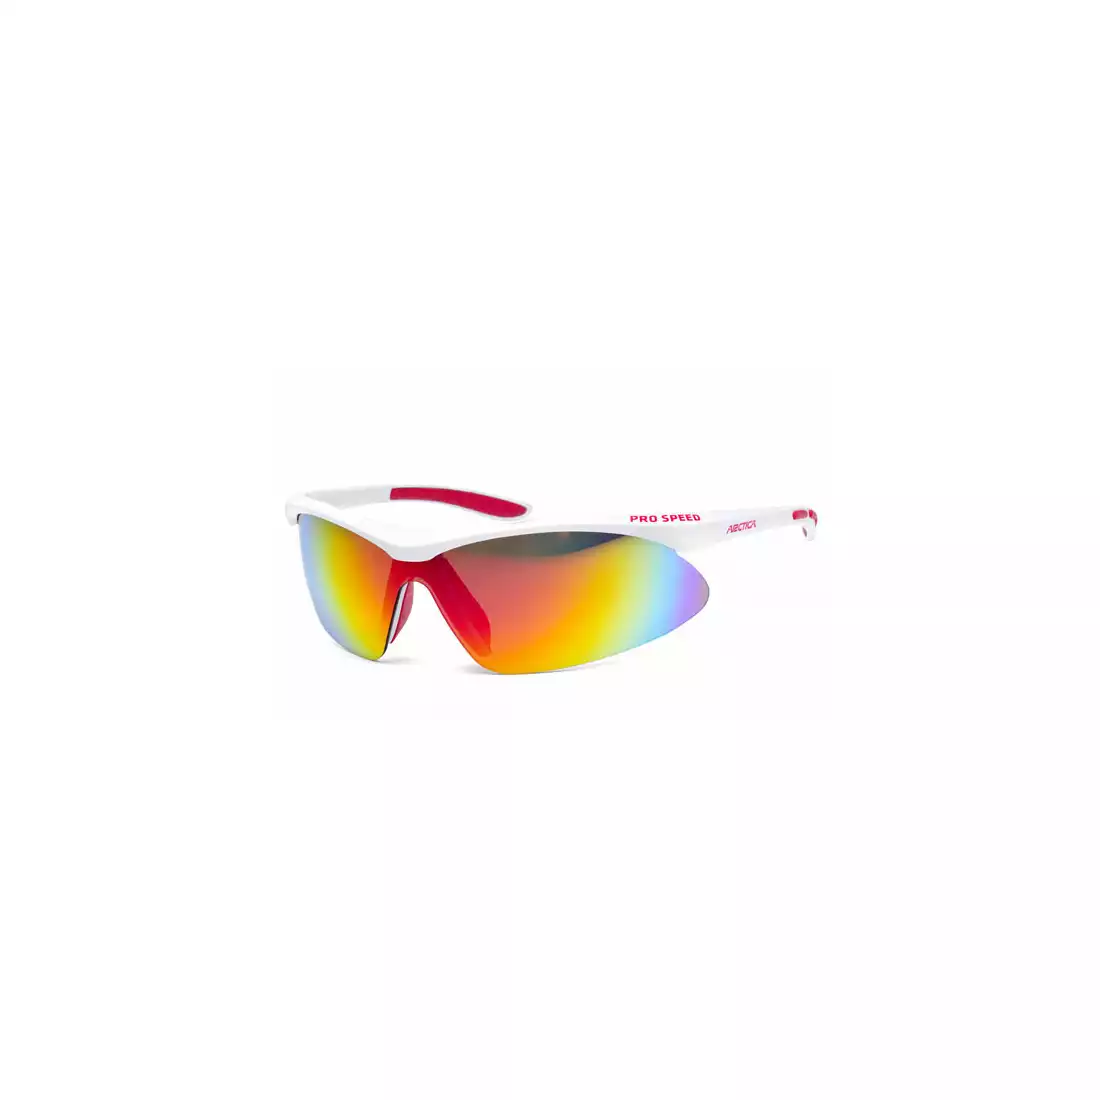 ARCTICA okulary sportowe, S 195 C